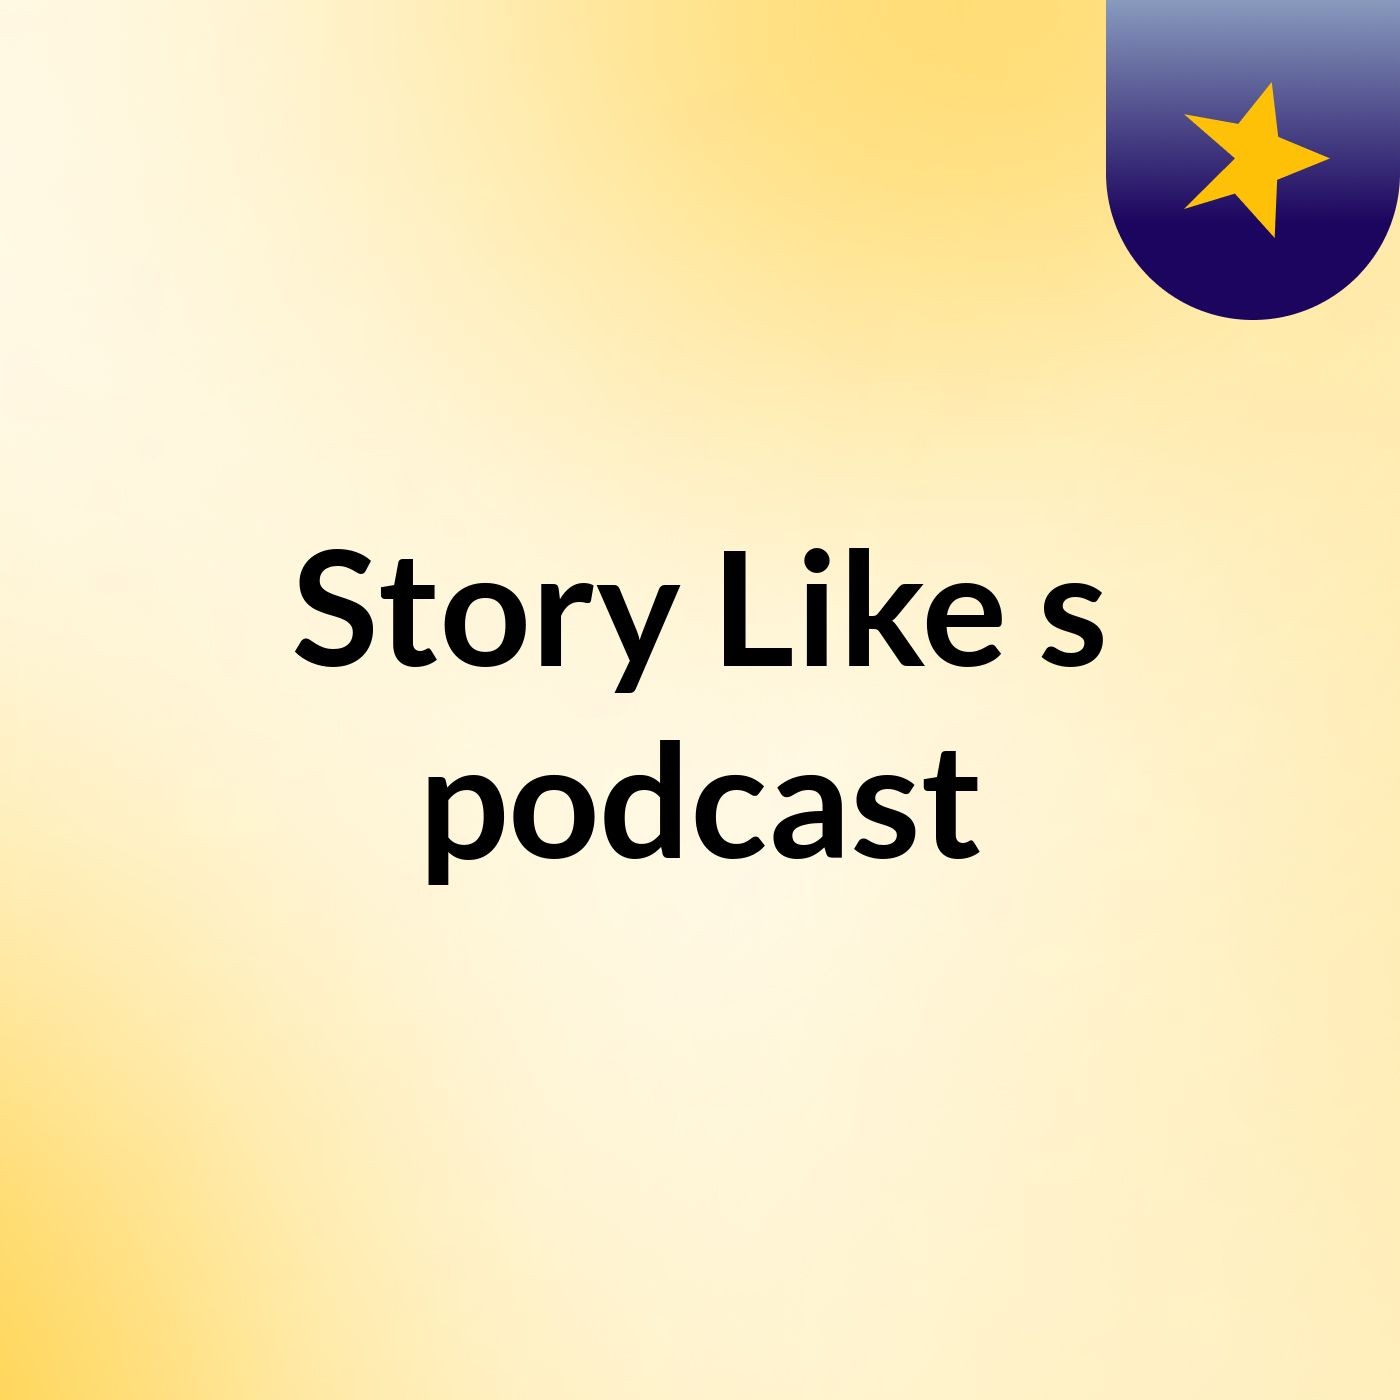 Episode 2 - Story Like's podcast